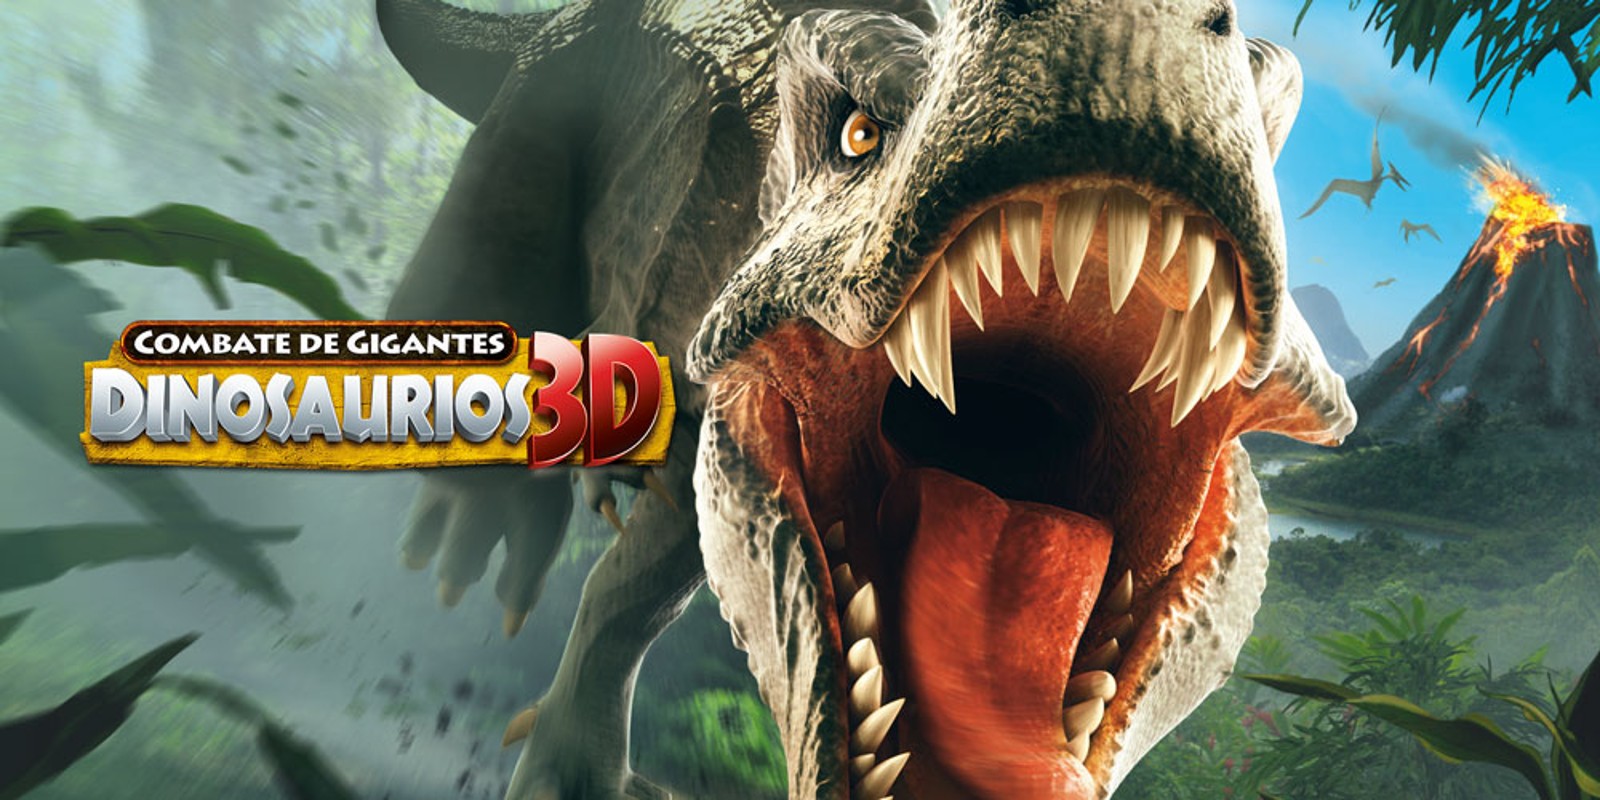 Combate de Gigantes Dinosaurios 3D